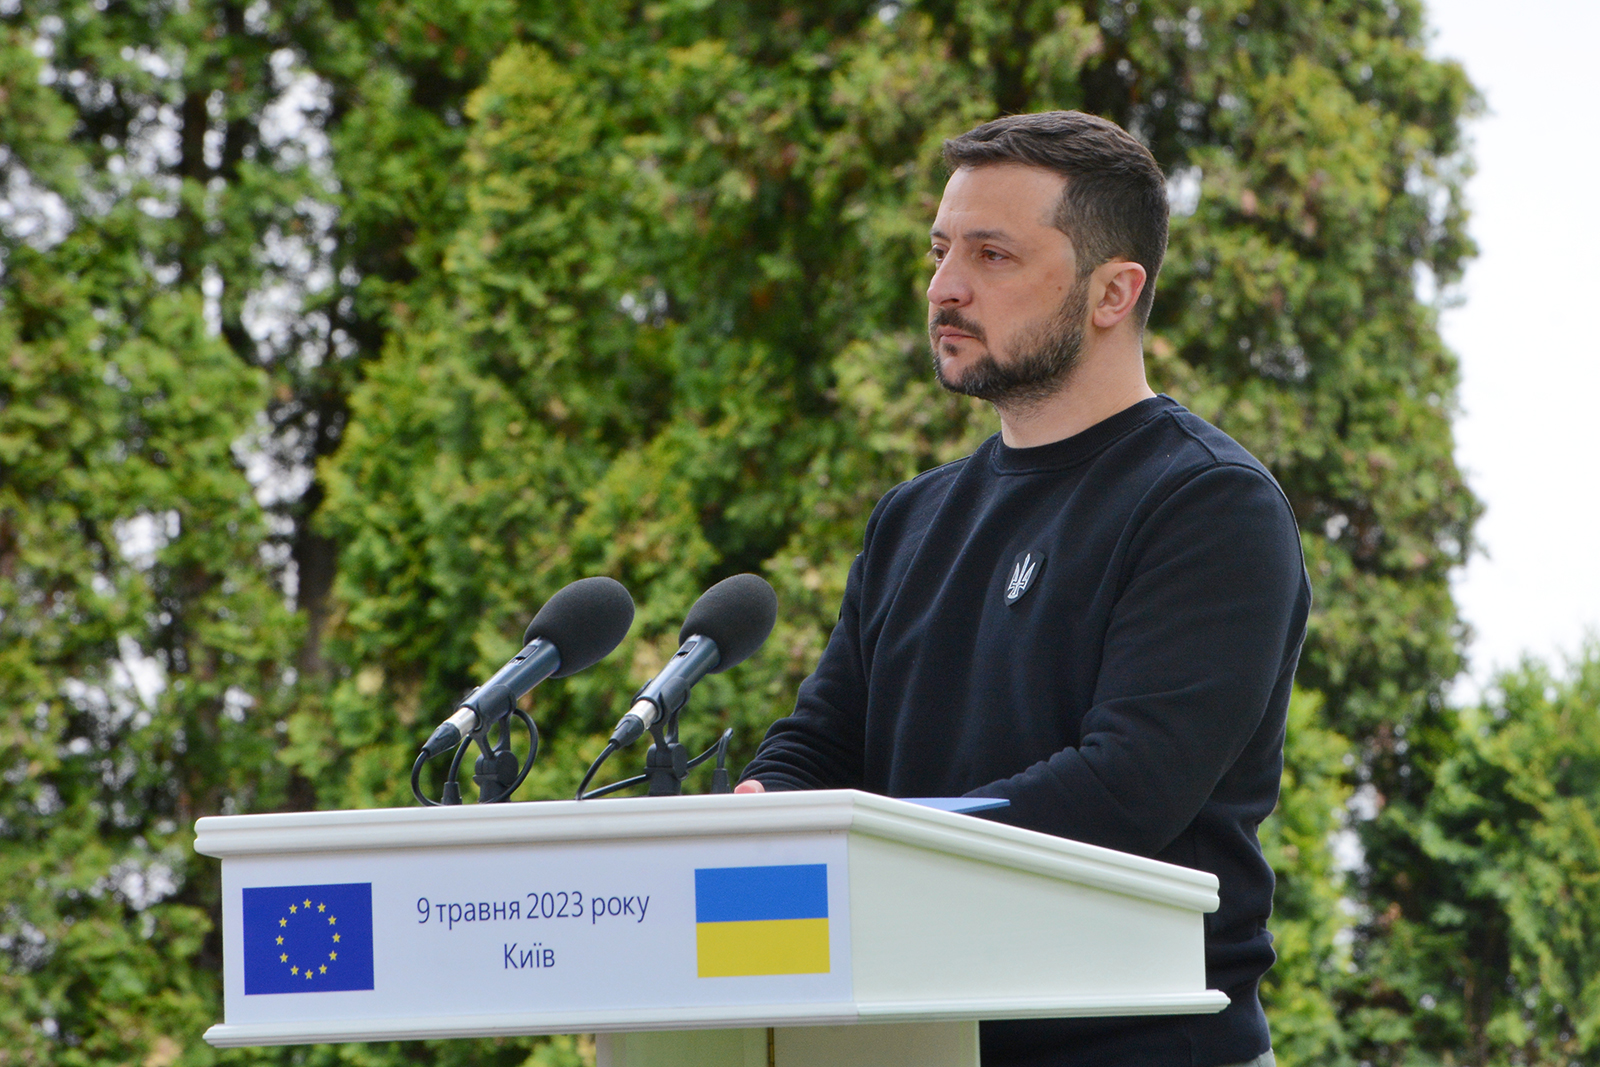 Volodymyr Zelenskiy attends a conference in Kyiv, Ukraine, on May 9.